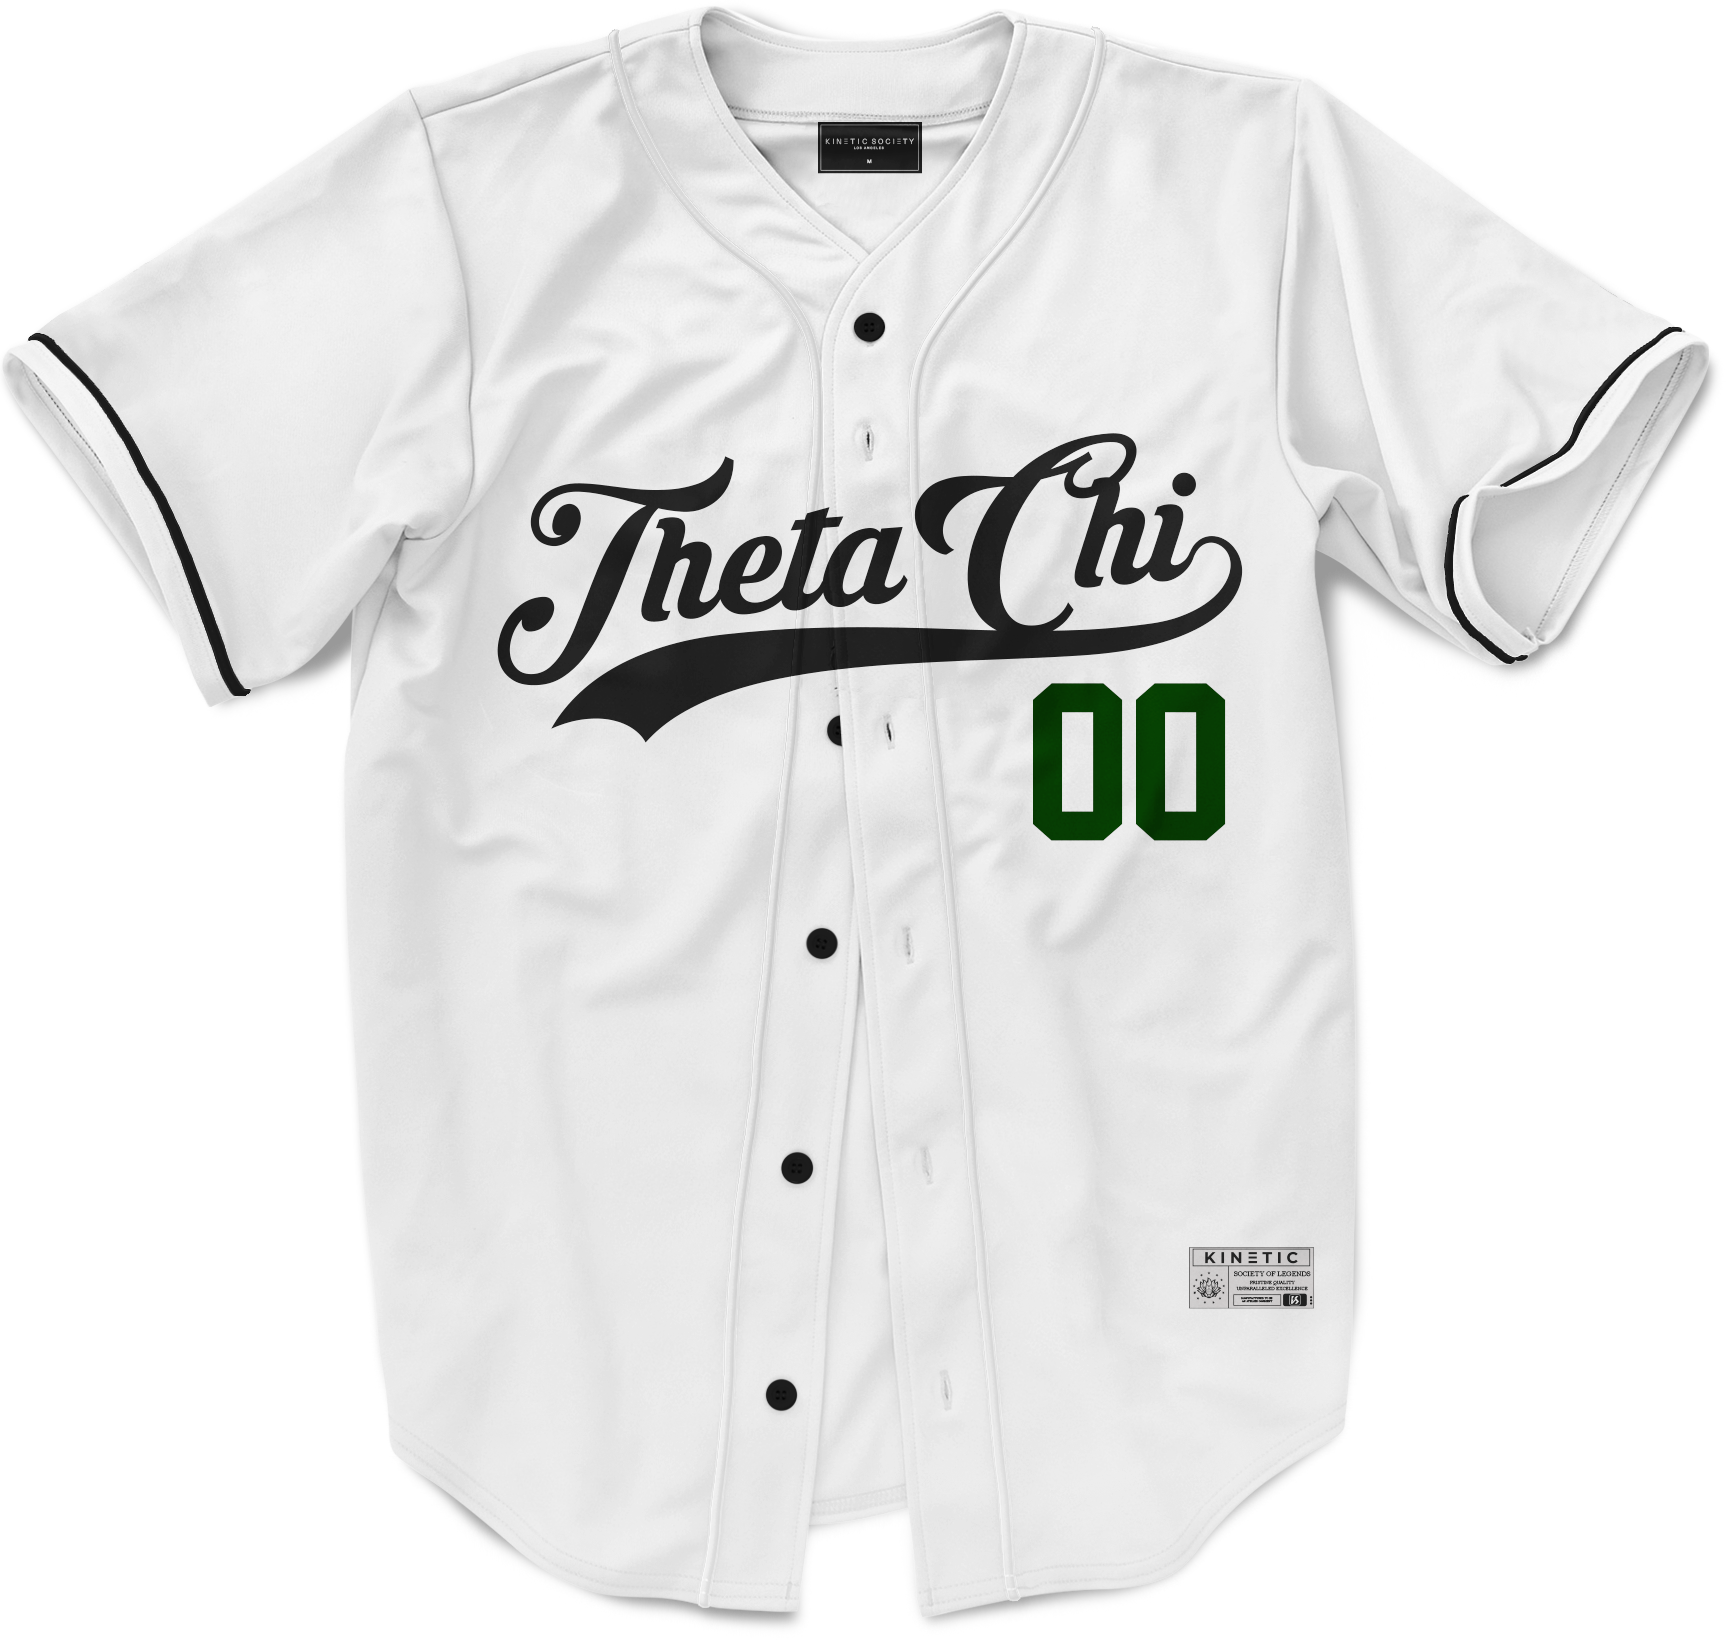 Theta Chi - Classic Ballpark Green Baseball Jersey